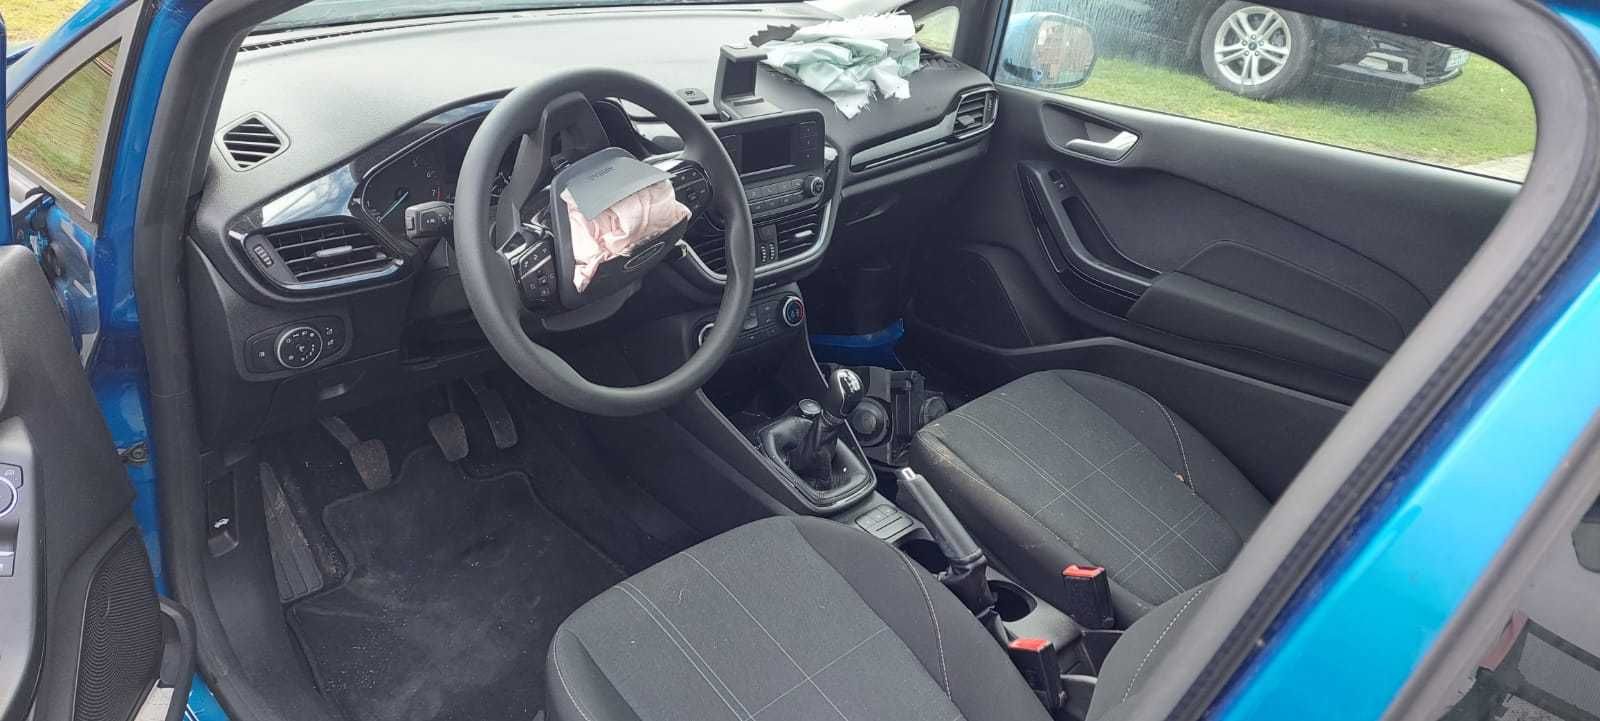 Ford Fiesta 1.1 benzyna 2019r